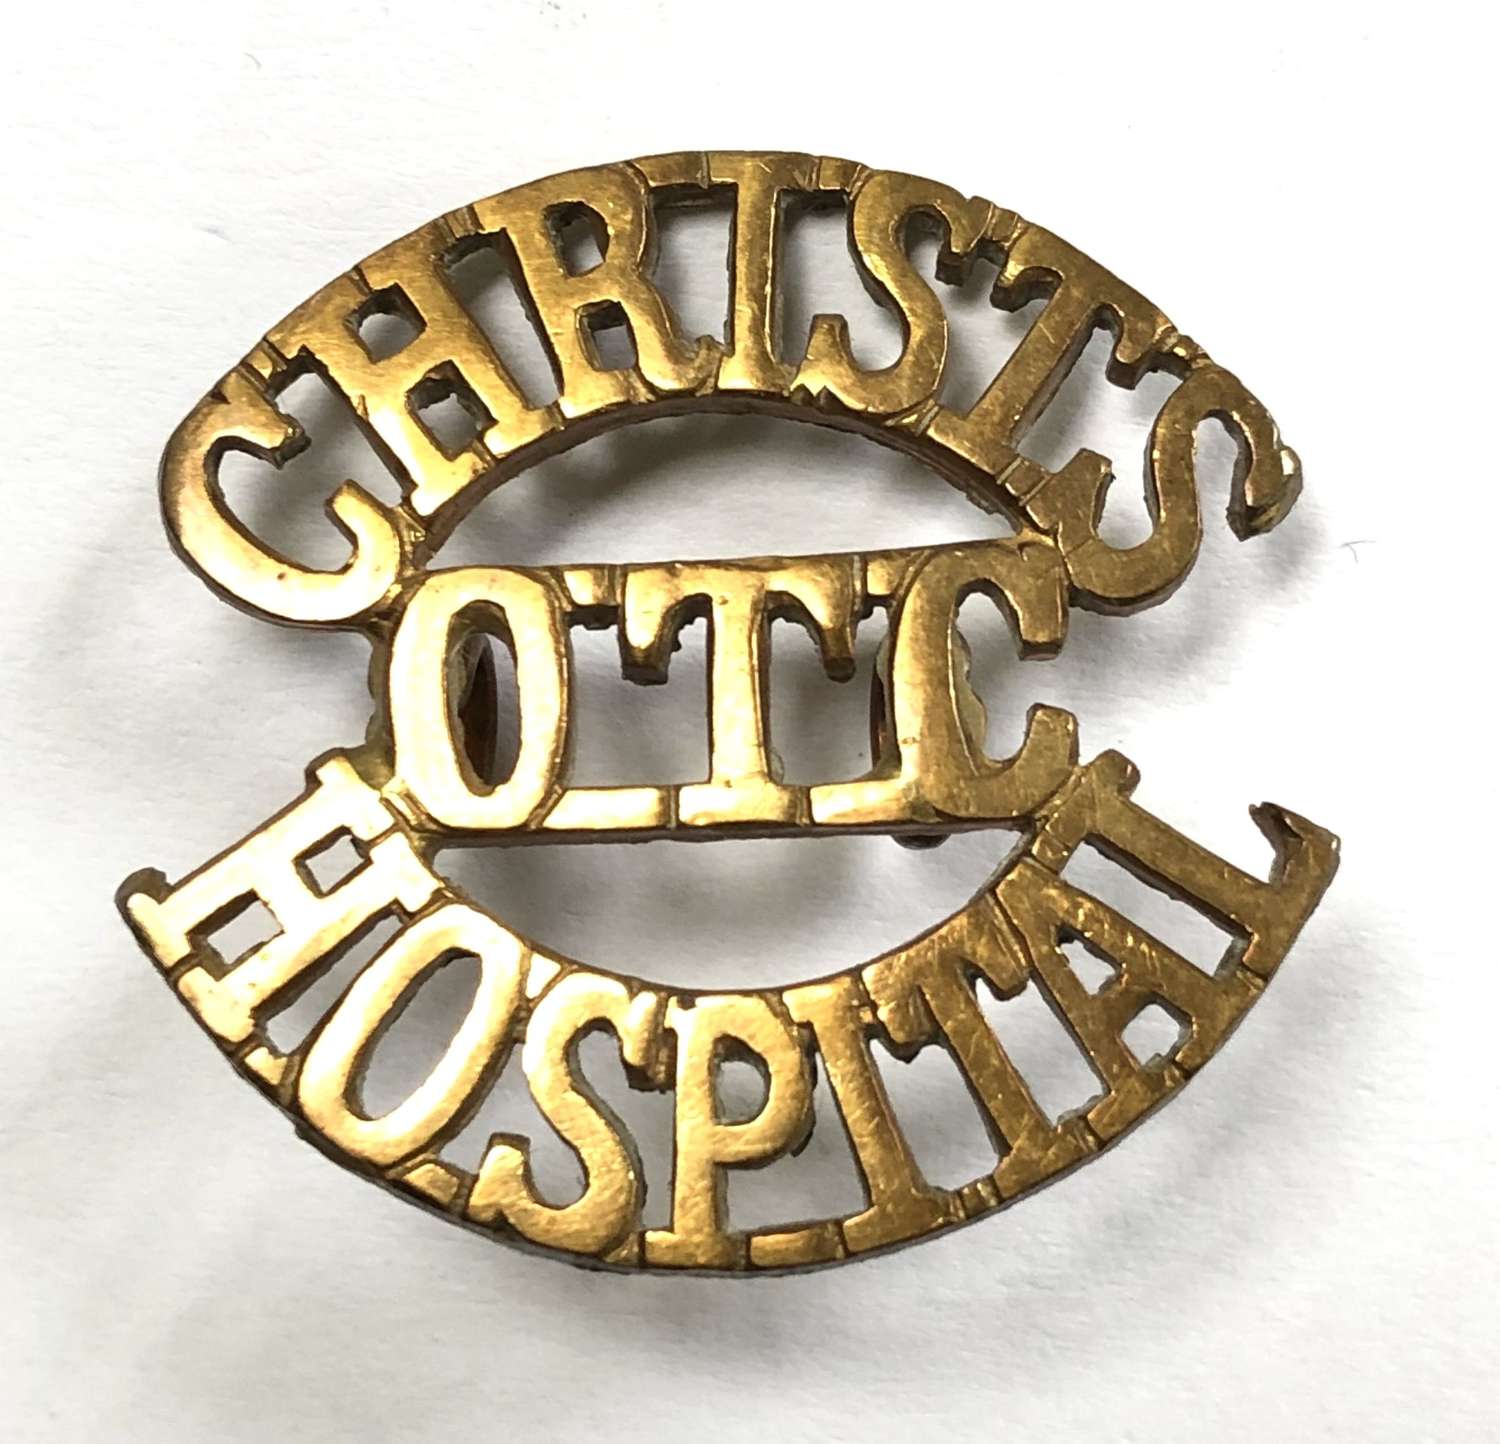 CHRISTS / OTC / HOSPITAL small shoulder title circa 1908-40